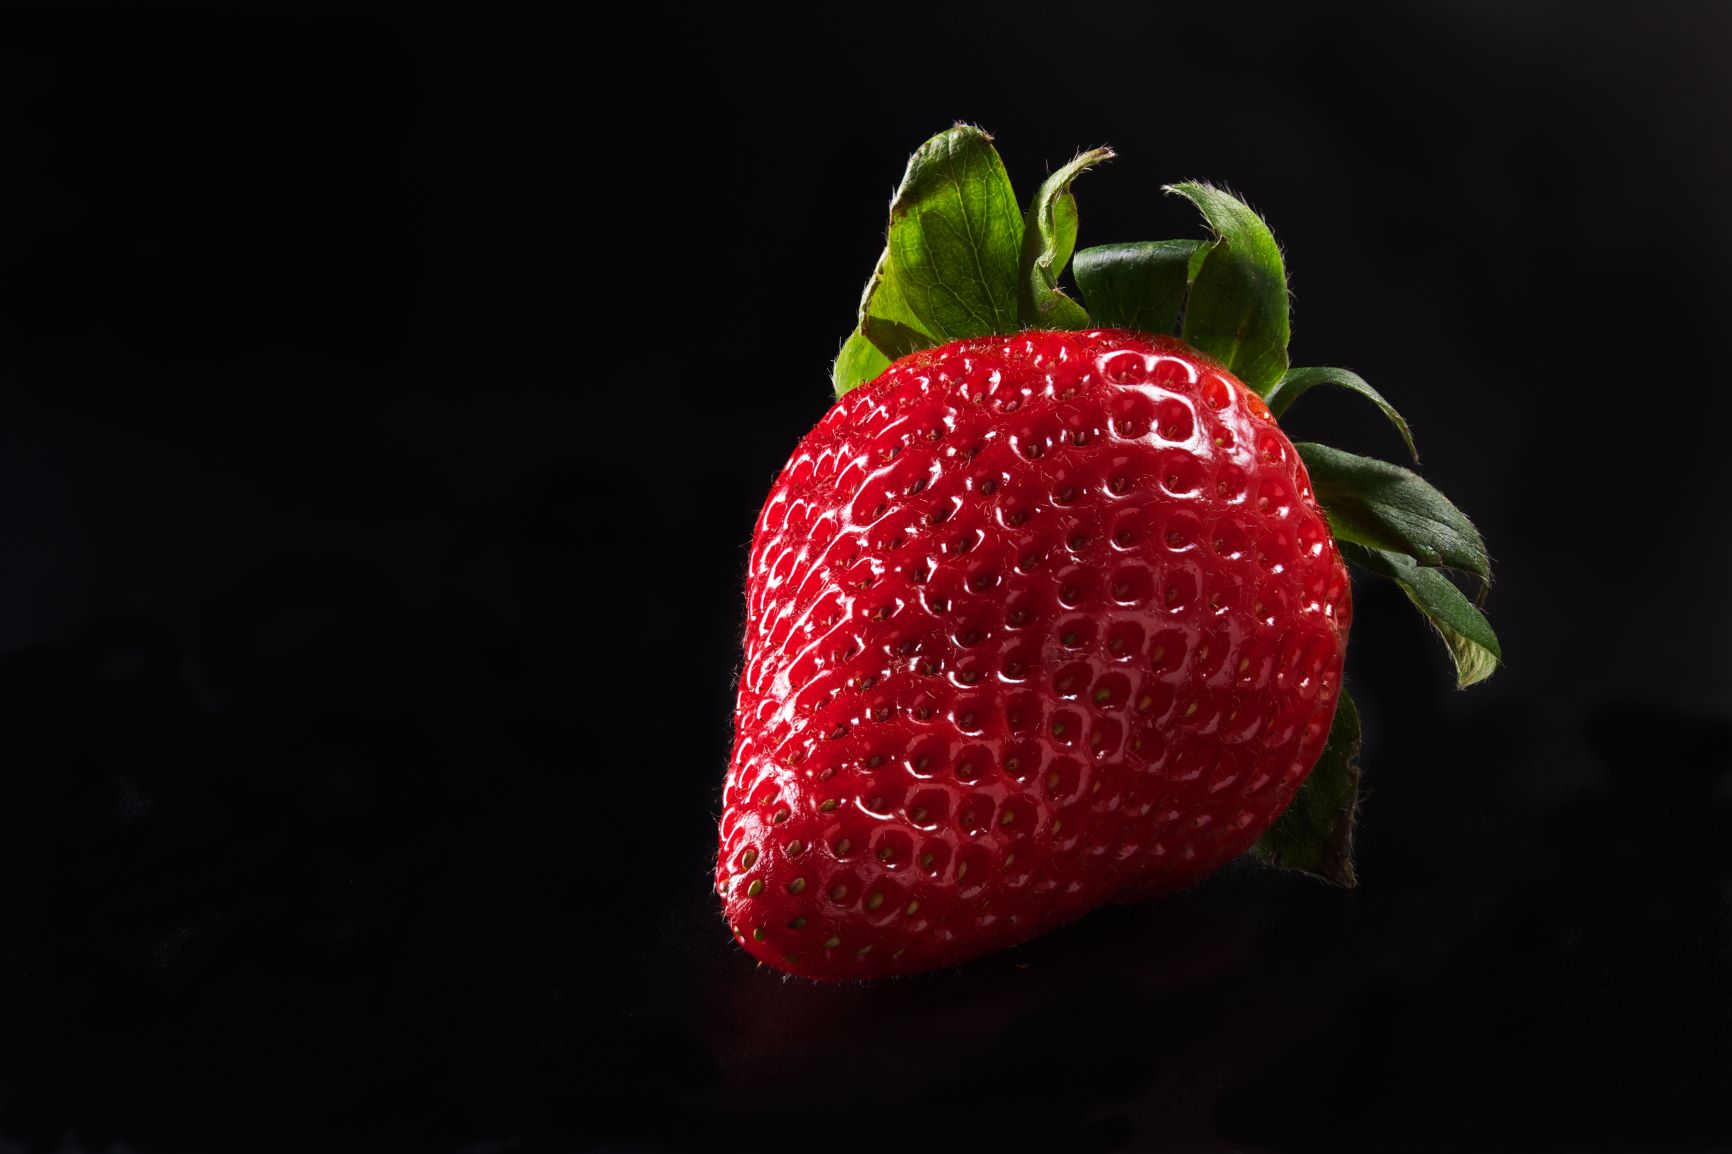 A sexy strawberry